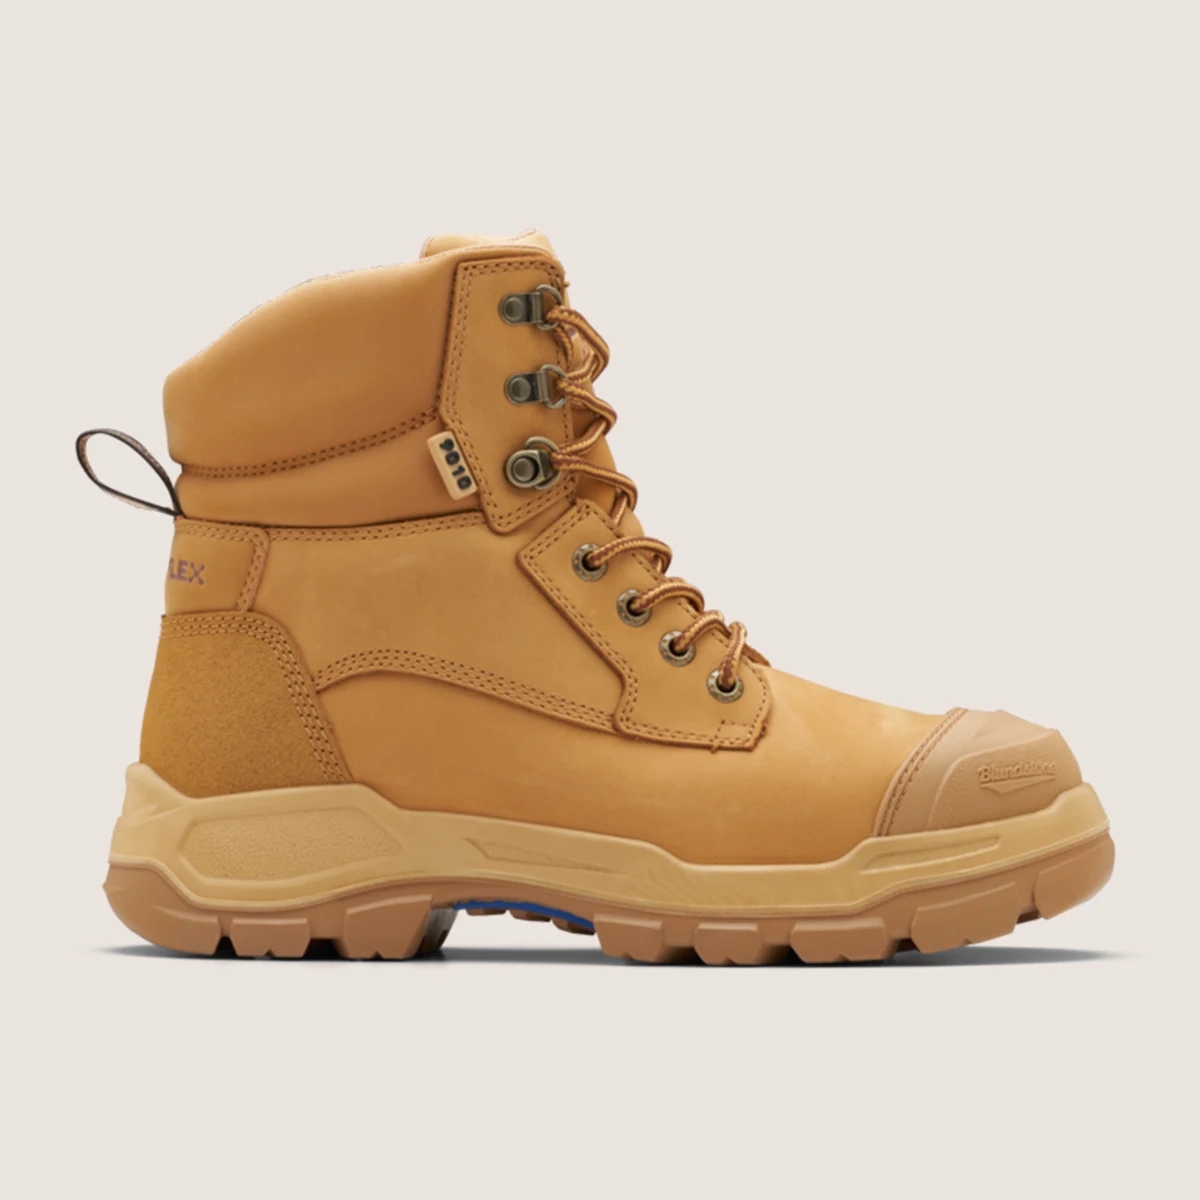 BLU-9010-Blundstone-rotoflex-wheat-safety-boots.jpg